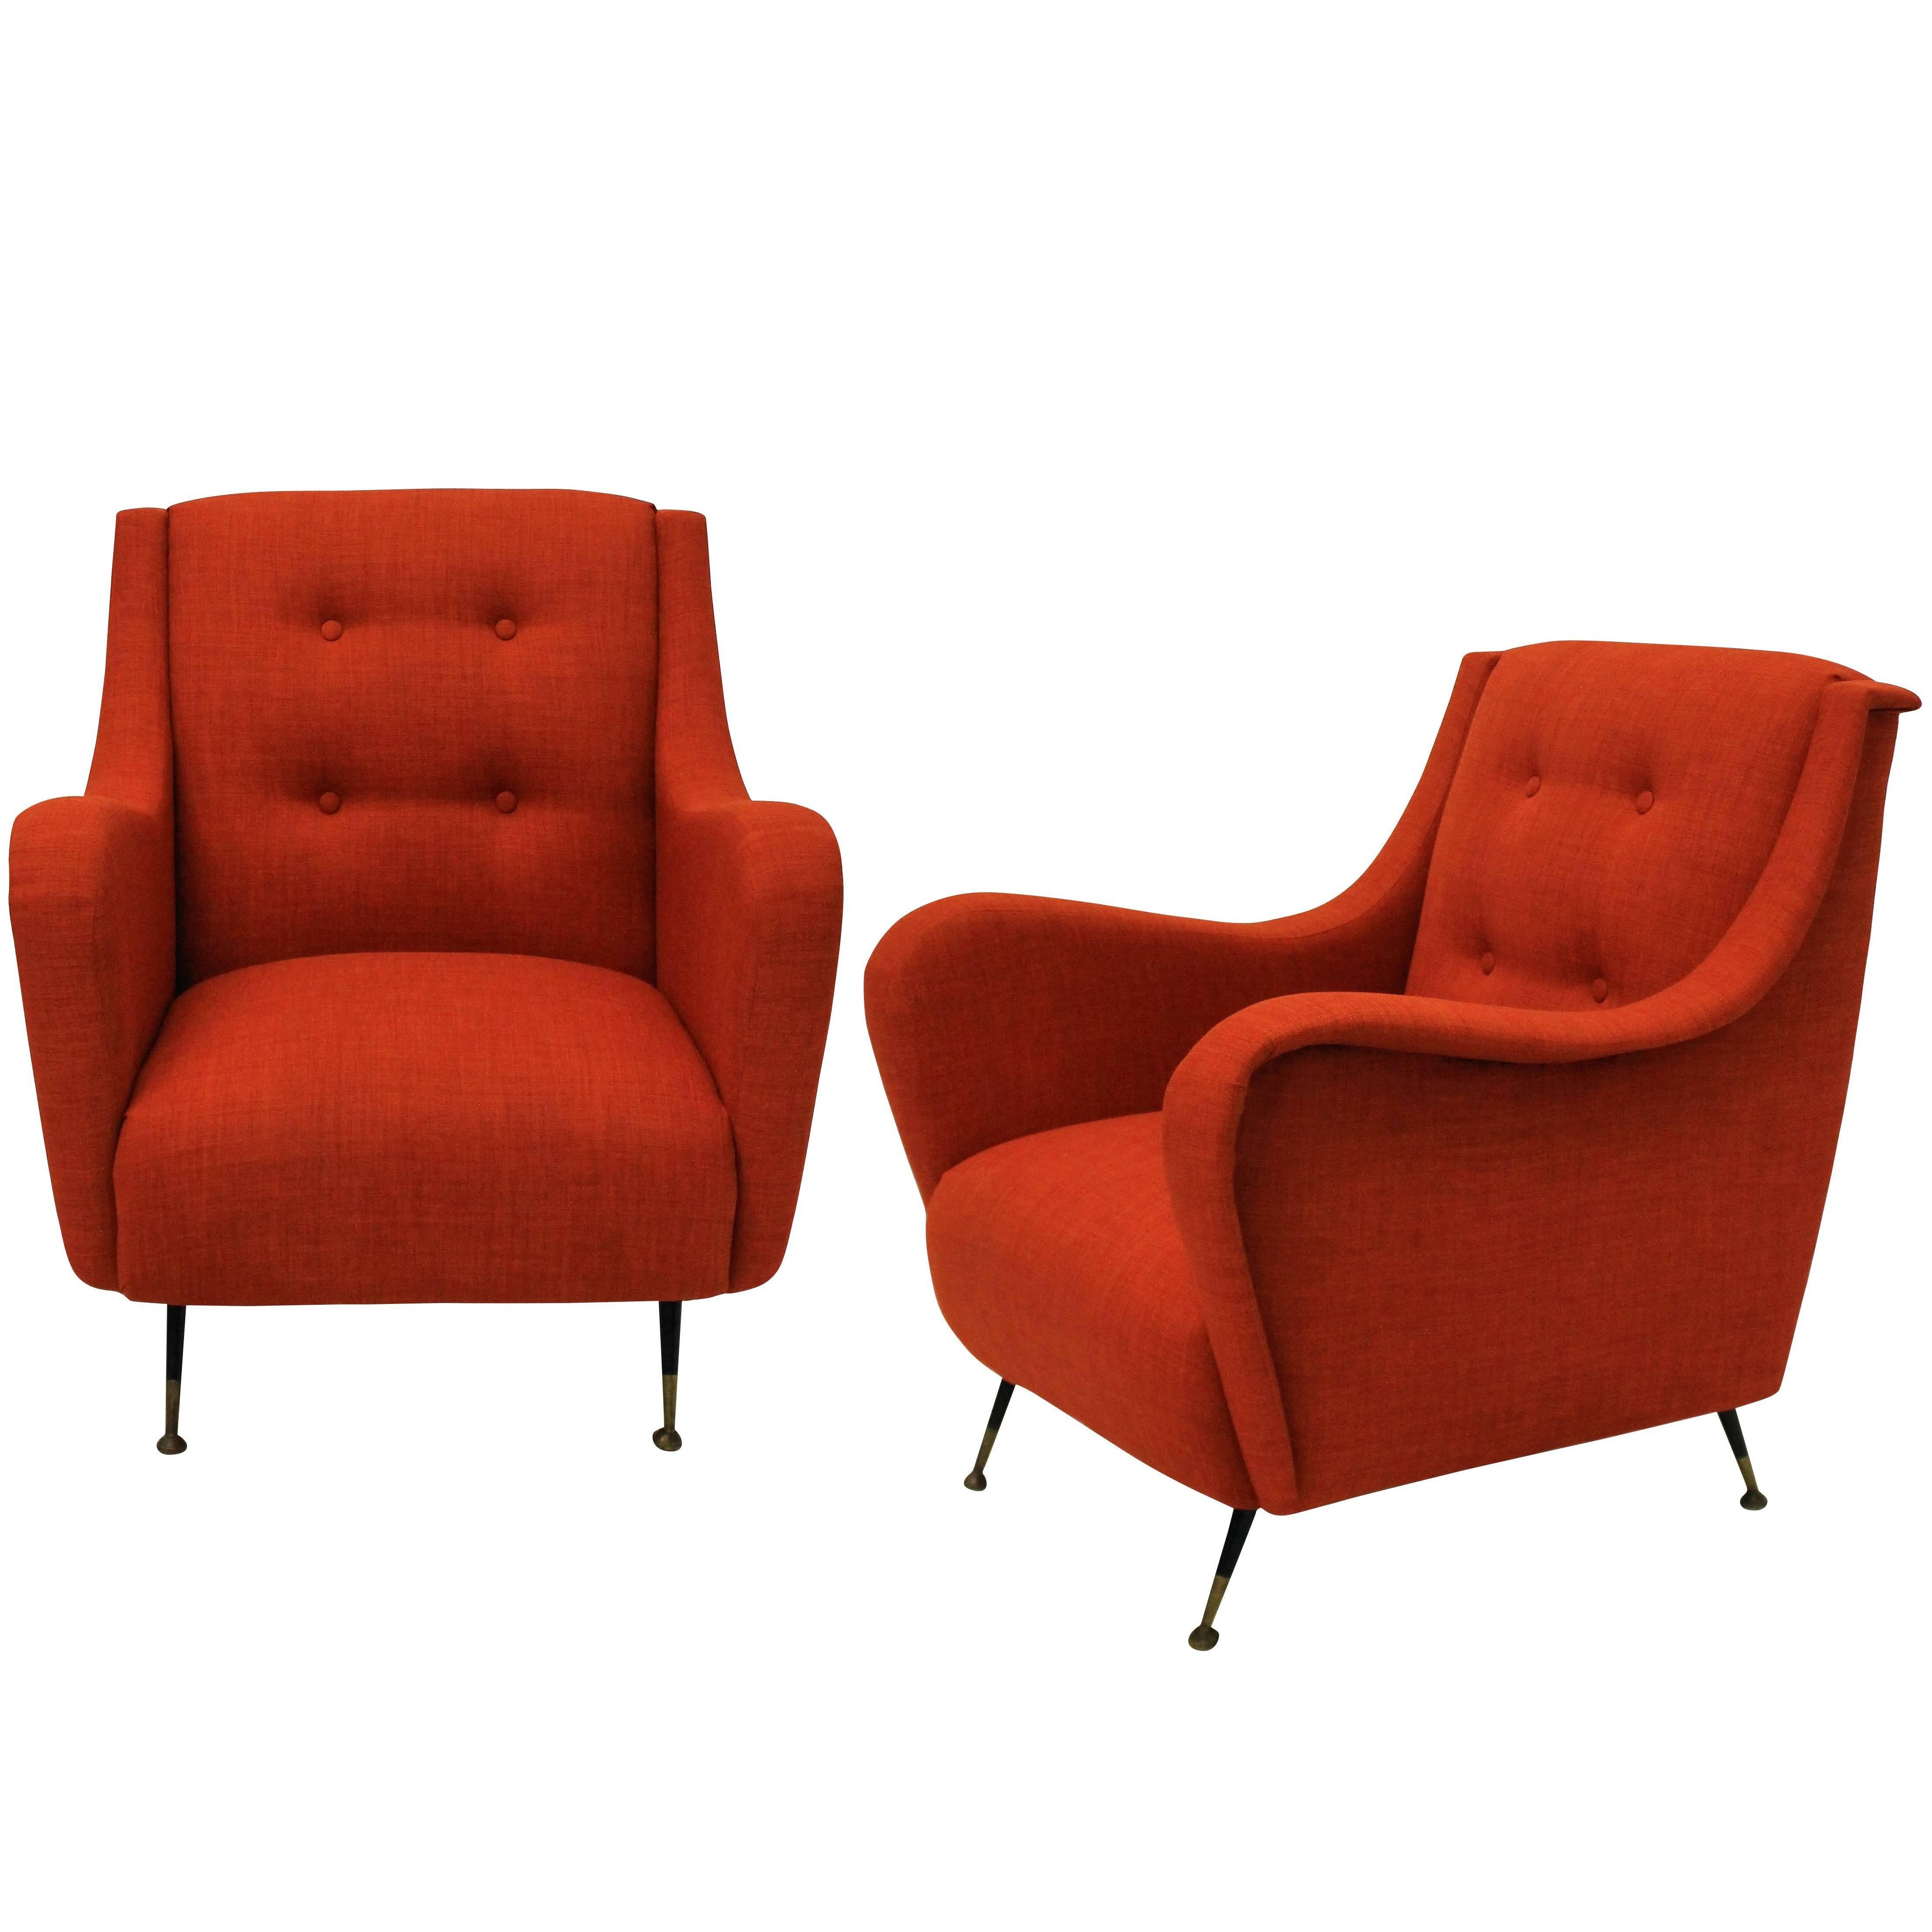 Pair of Midcentury Armchairs in Burnt Orange